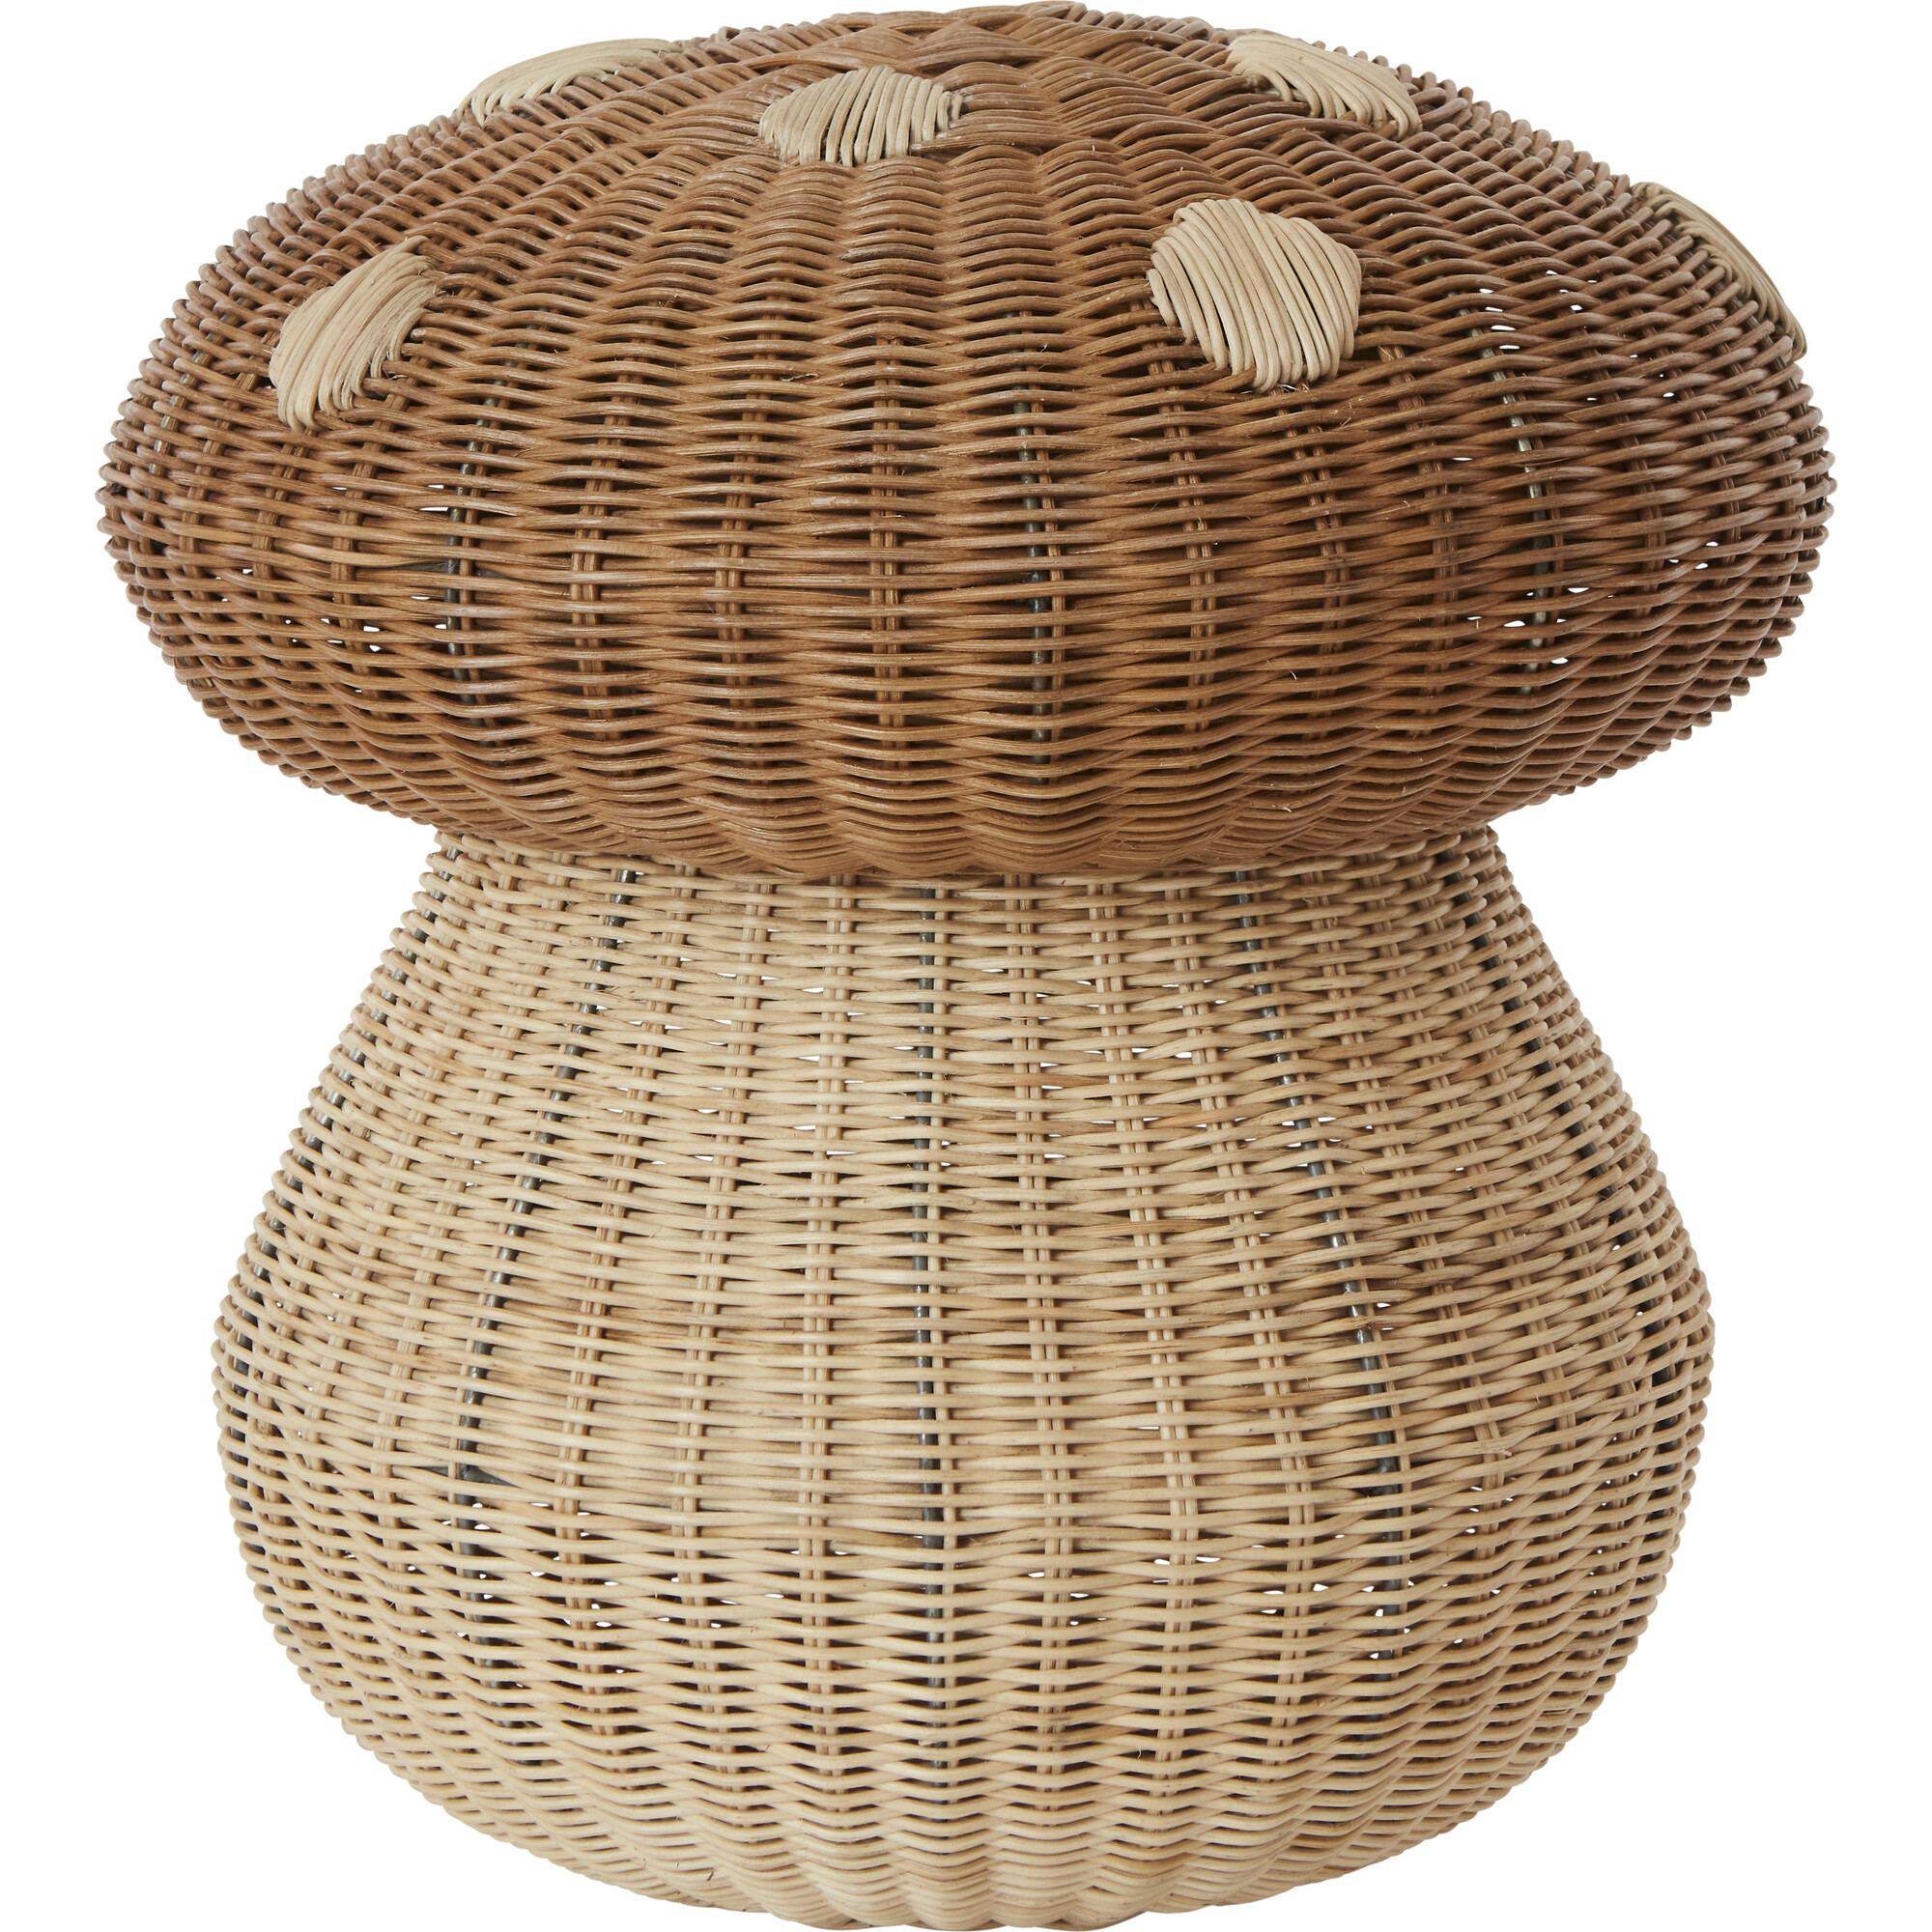 Rattan Mushroom Storage Basket, Natural - Oyoy Storage